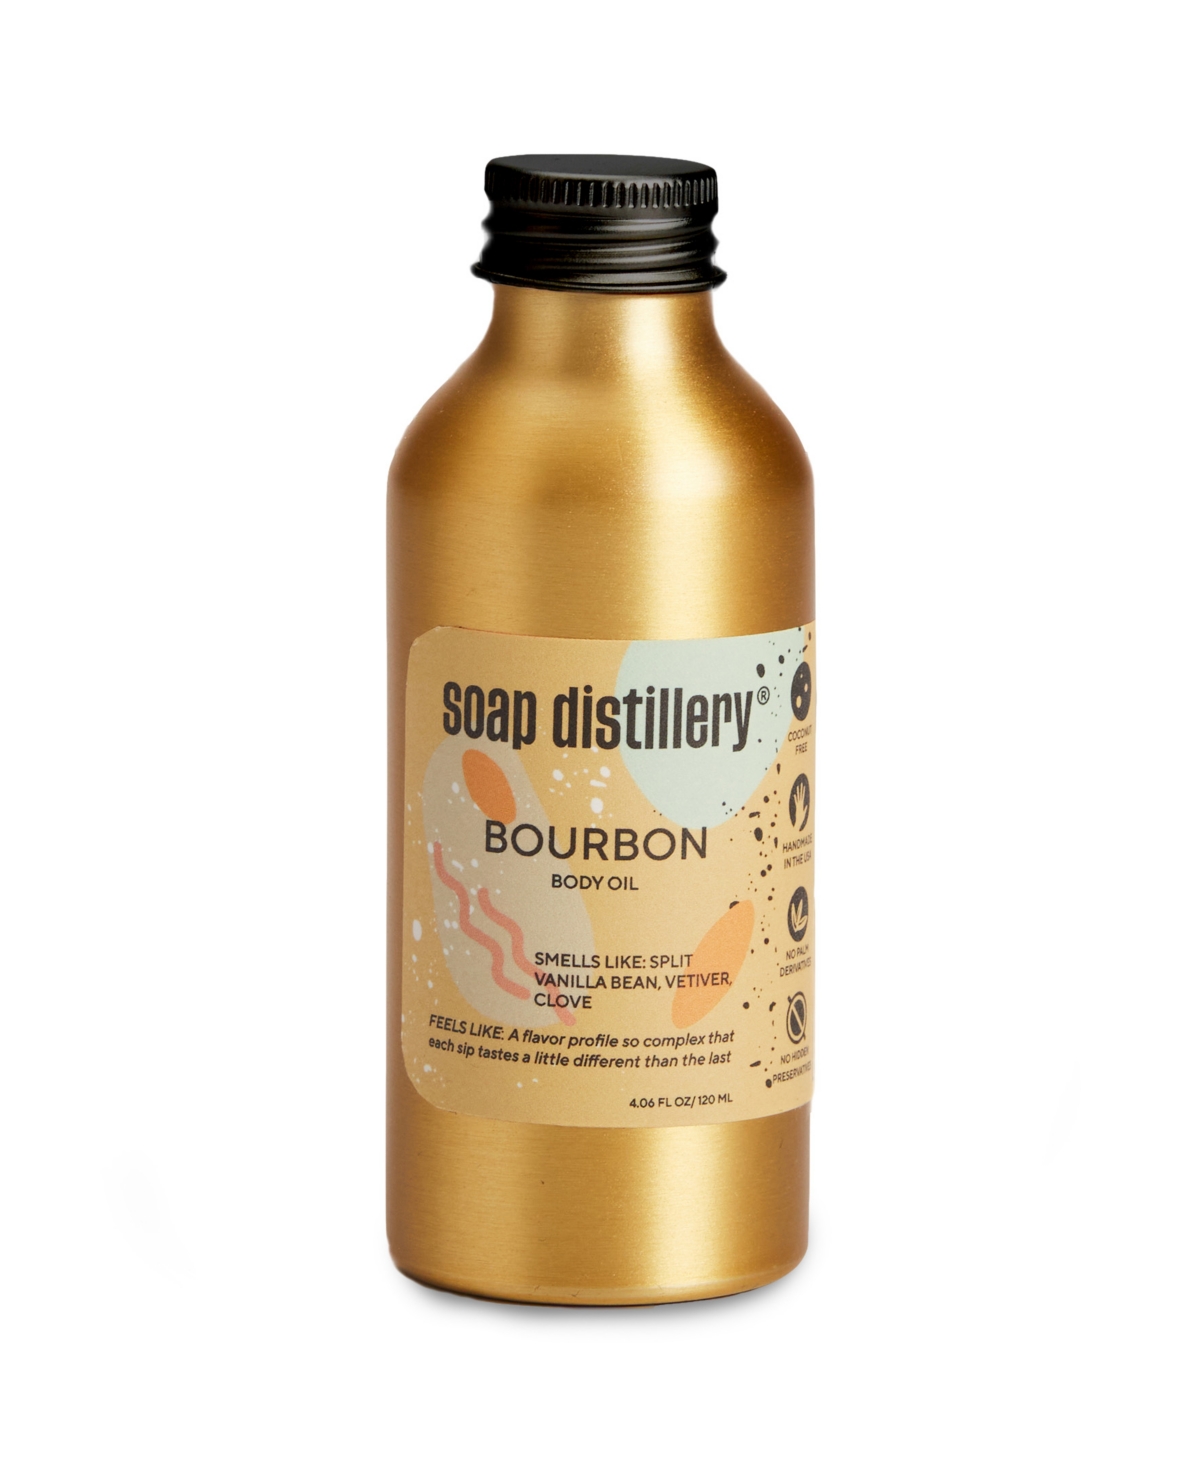 Soap Distillery Bourbon Botanical Botanical Body Oil In Gold